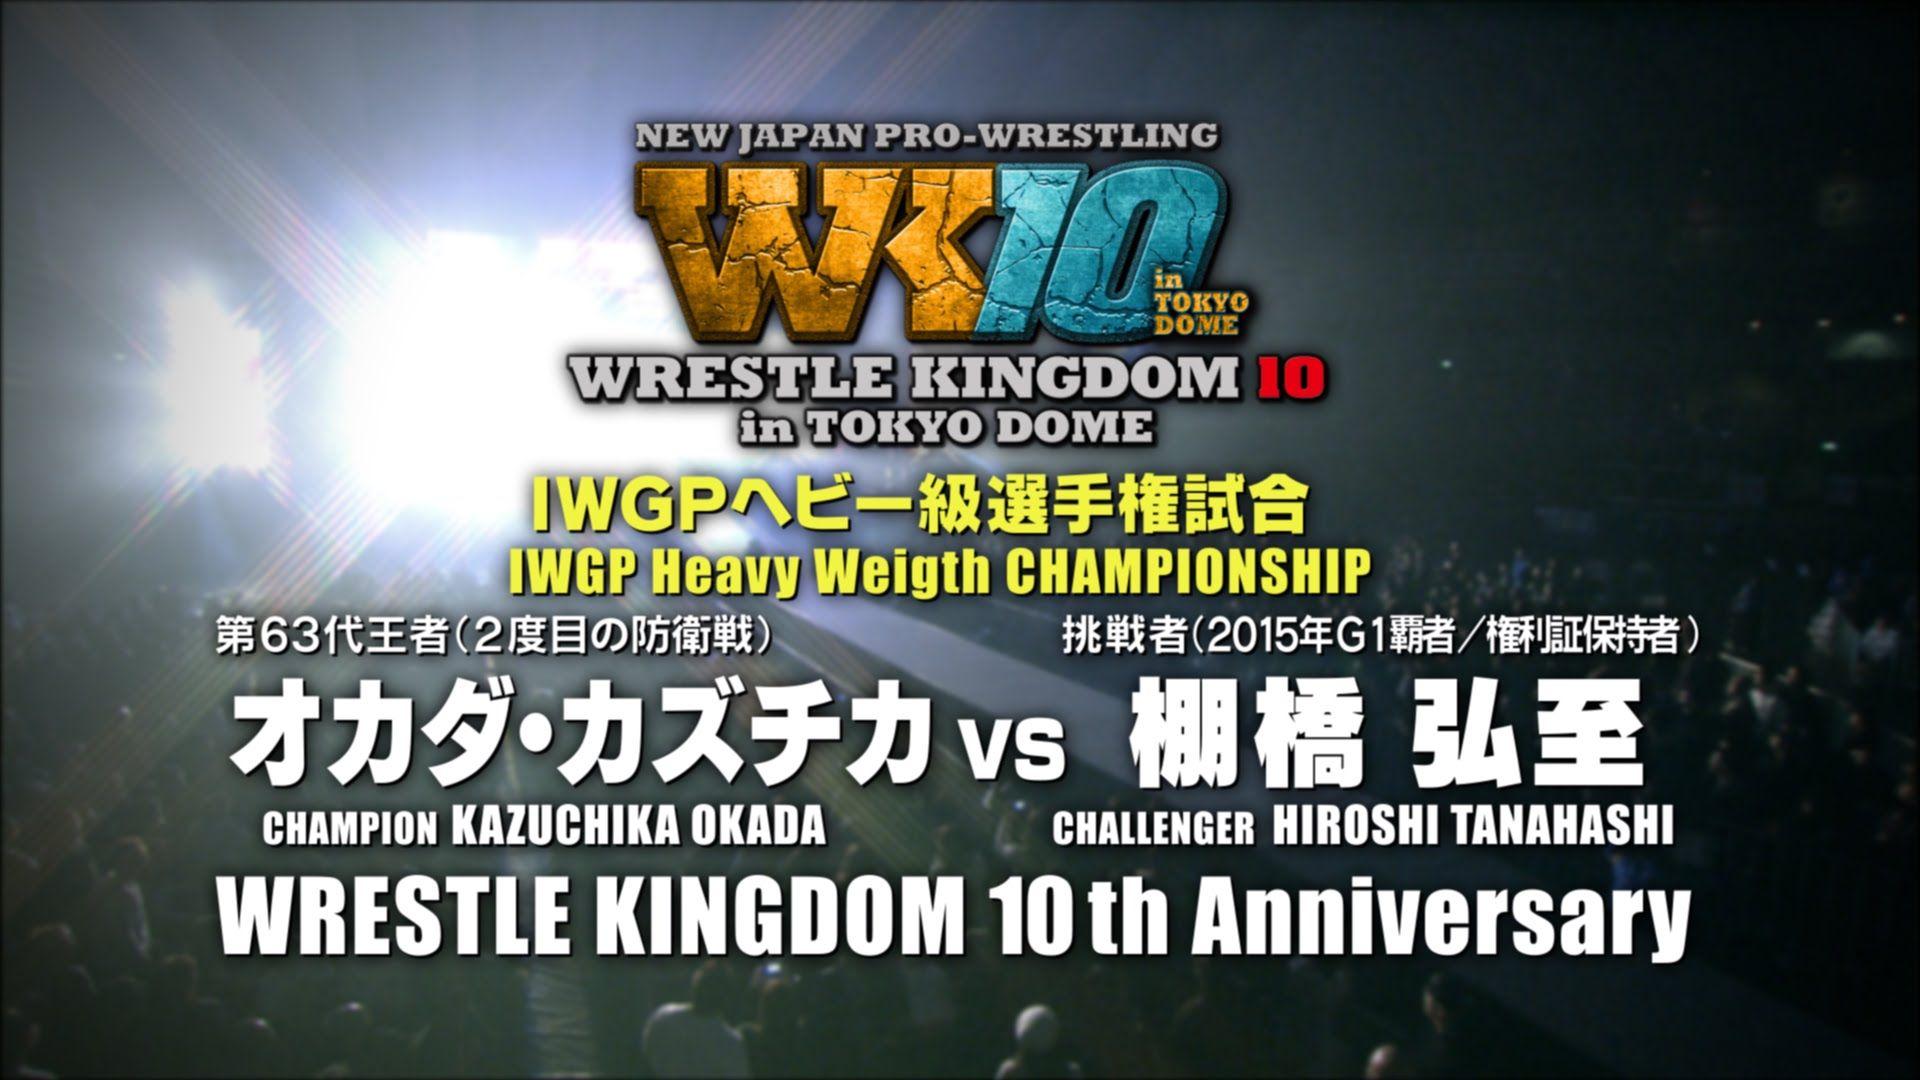 WRESTLE KINGDOM 10 in TOKYODOME PV